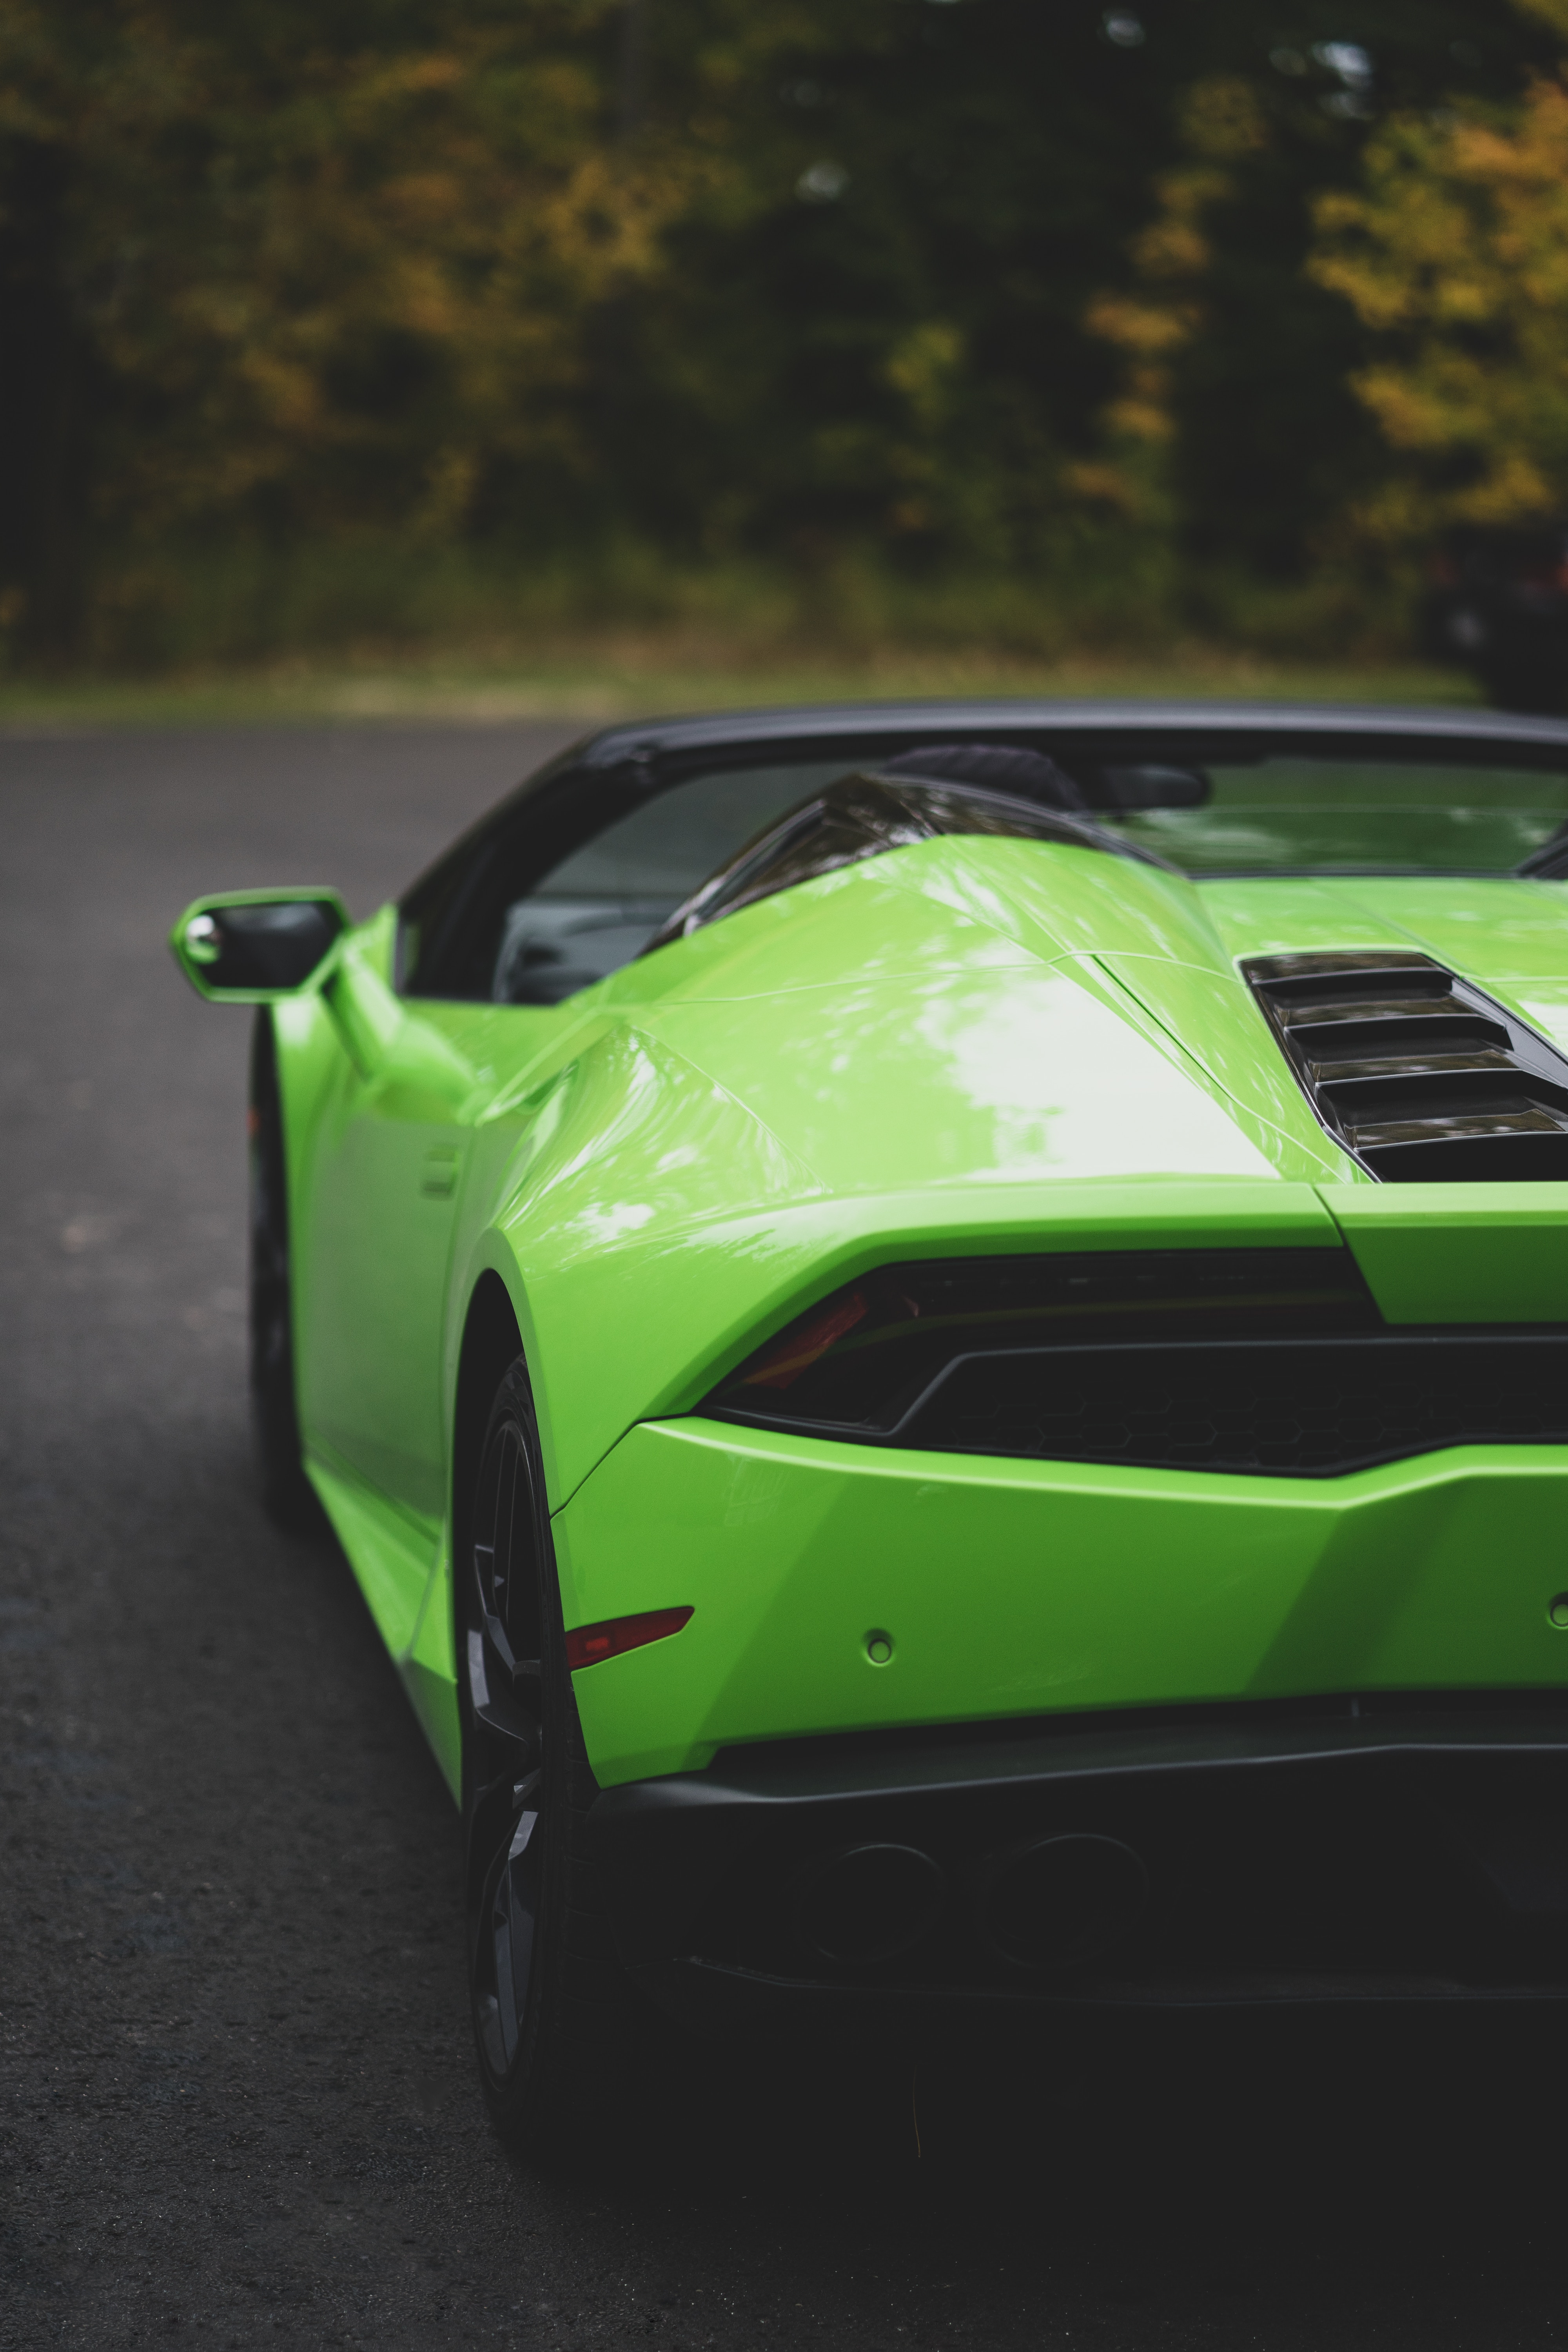 Wallpaper Green Lamborghini Aventador on Road During Daytime, Background -  Download Free Image